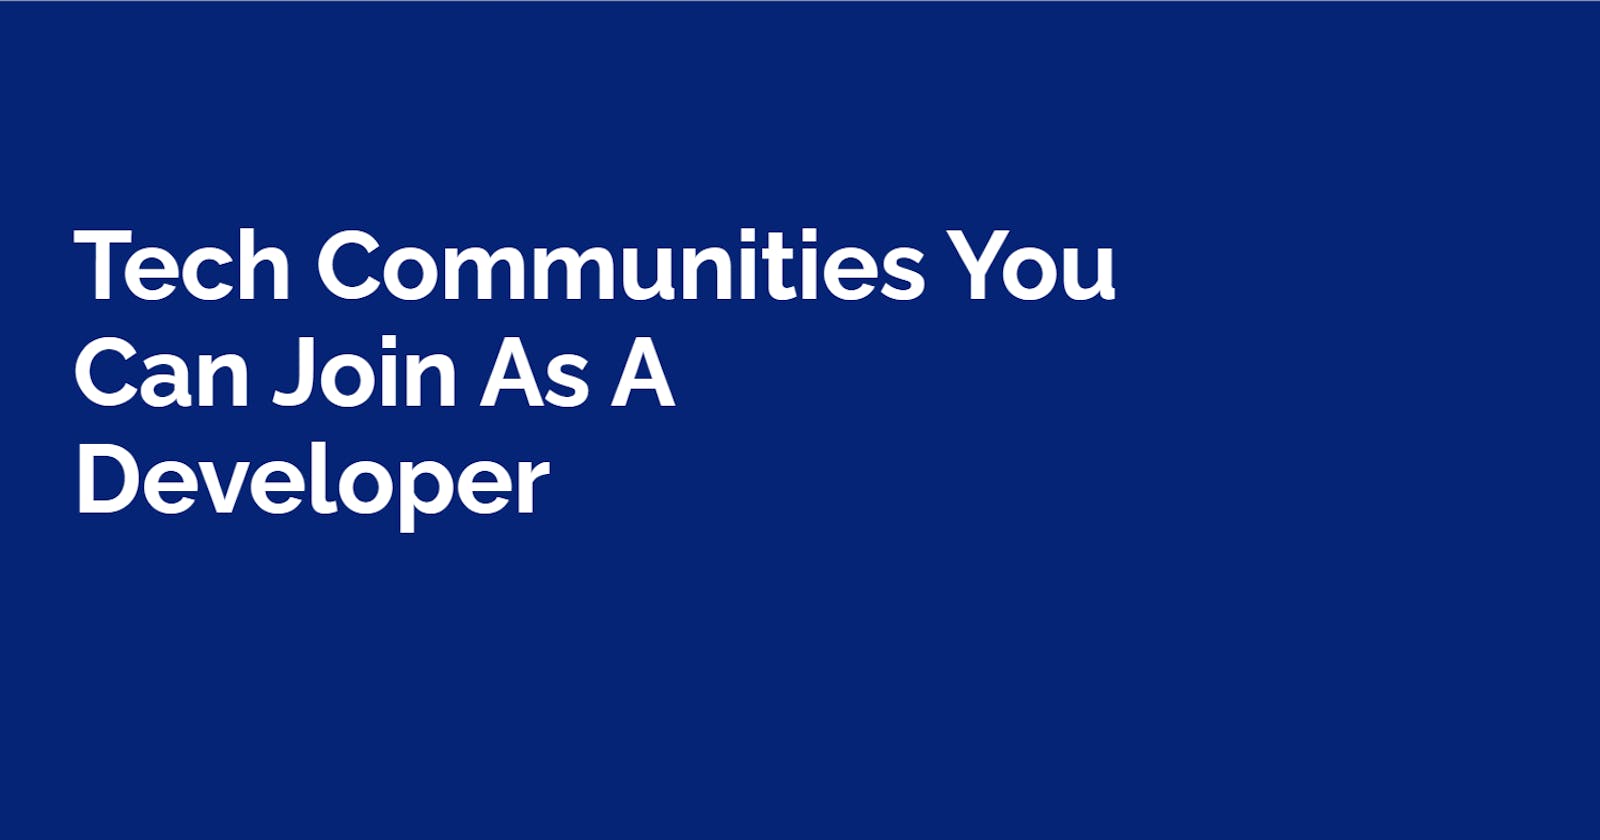 Tech Communities You Can Join As A Developer.